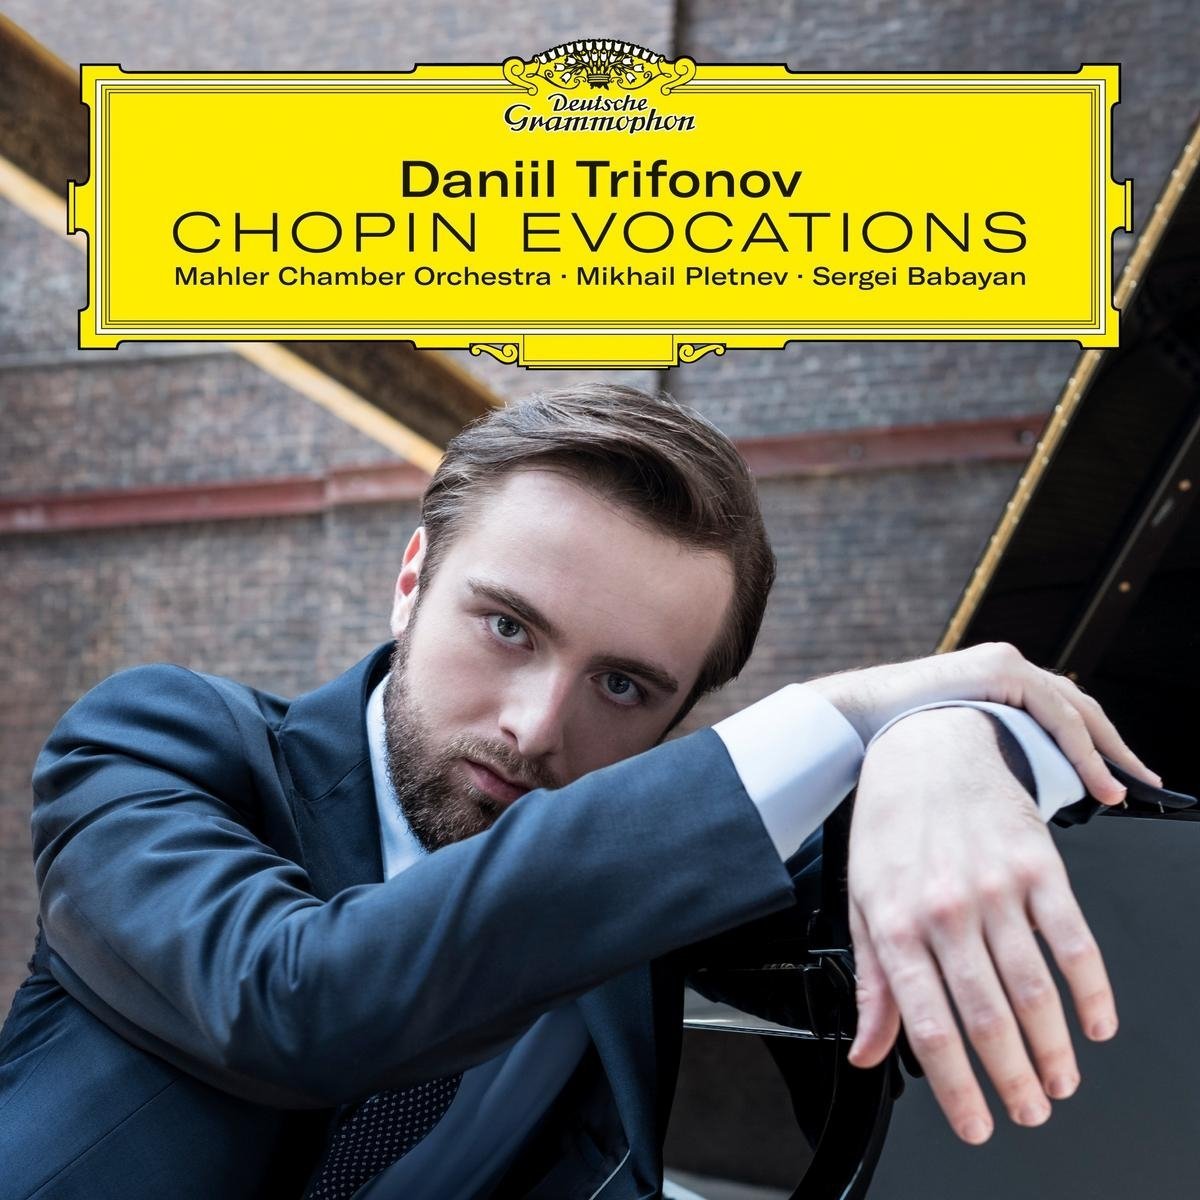 Chopin Evocations Daniil Trifonov